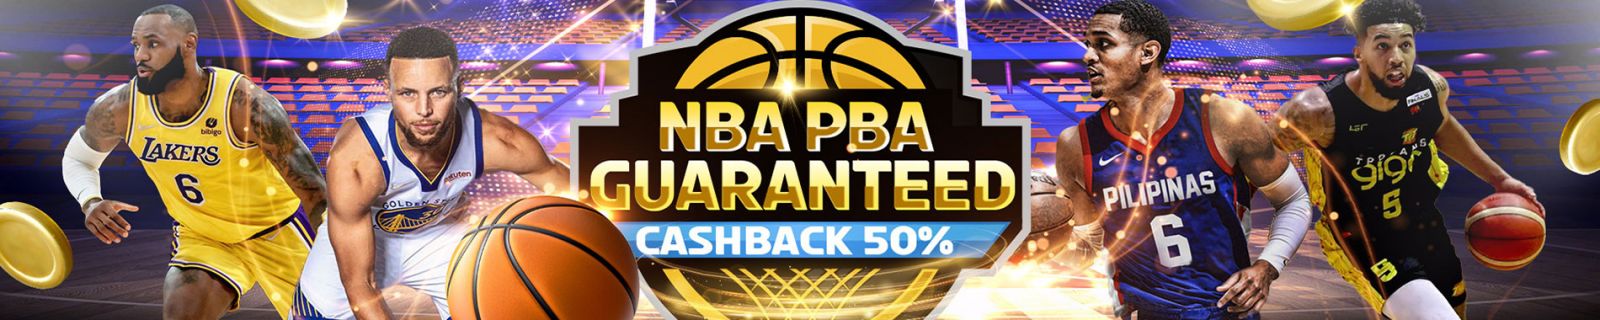 NBA, PBA Basketball Cashback ₱5000